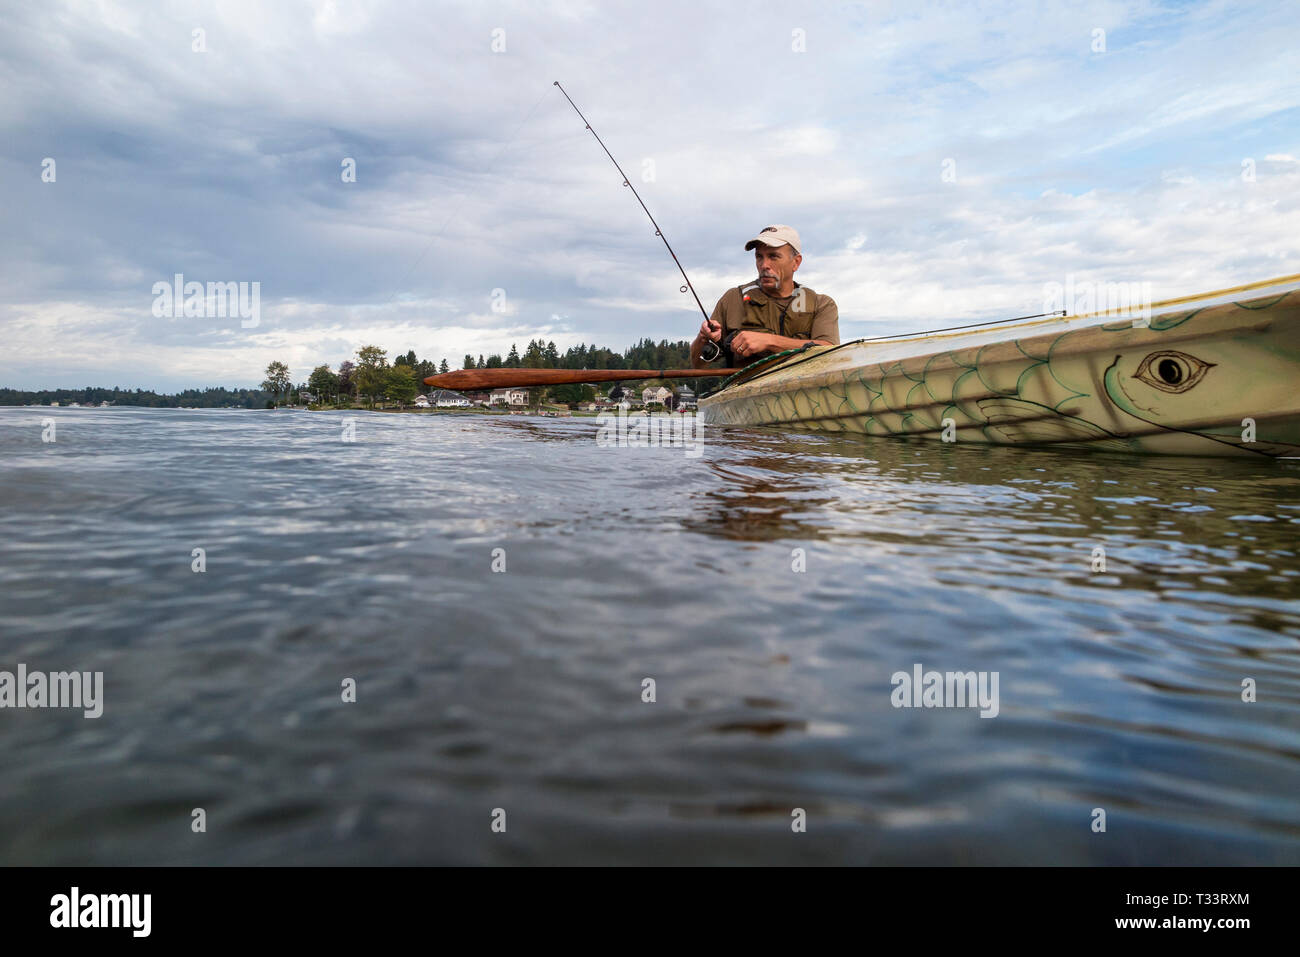 WA09969-00...WASHINGTON - Phil Russell fishing in Lake Stevens. (MR# R8) Stock Photo